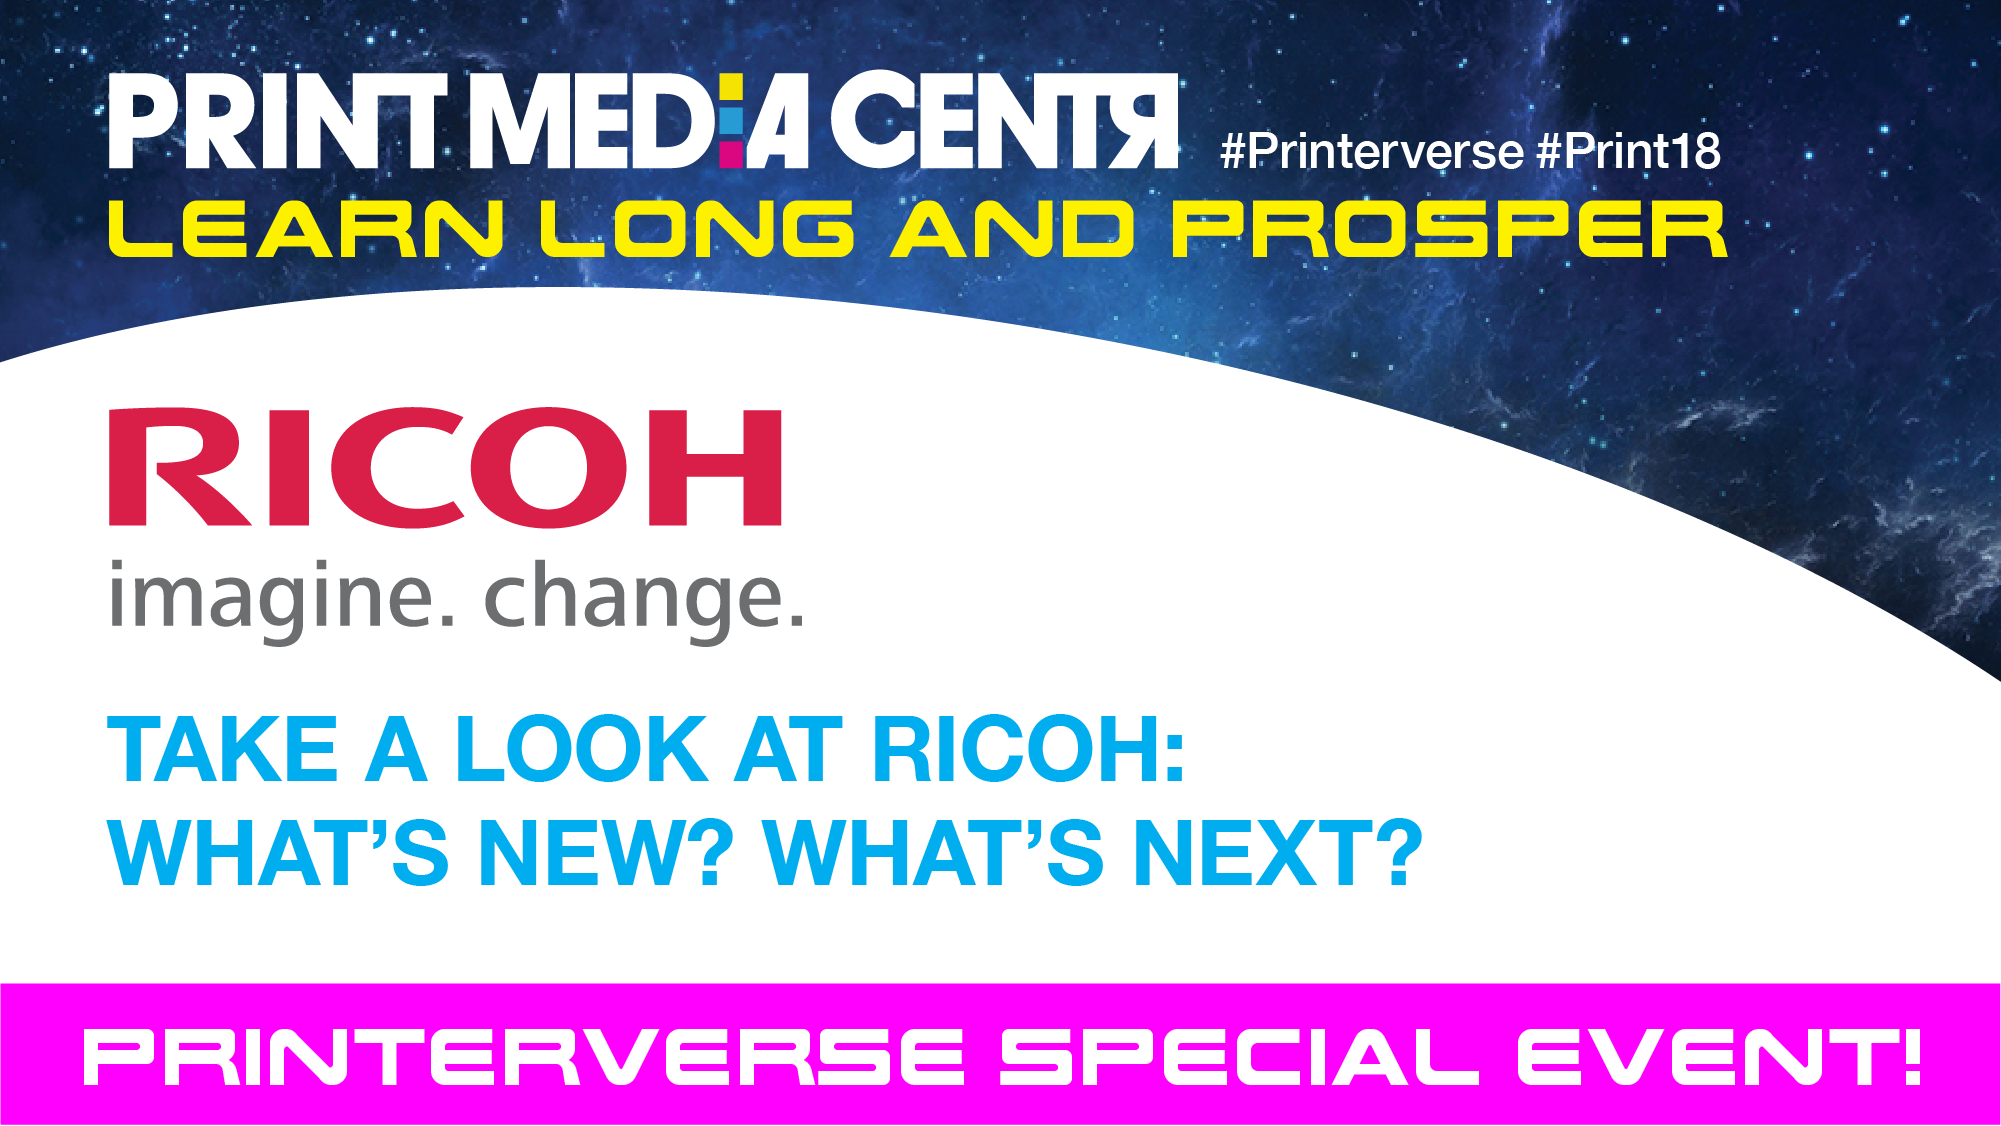 Ricoh Print Media Centr